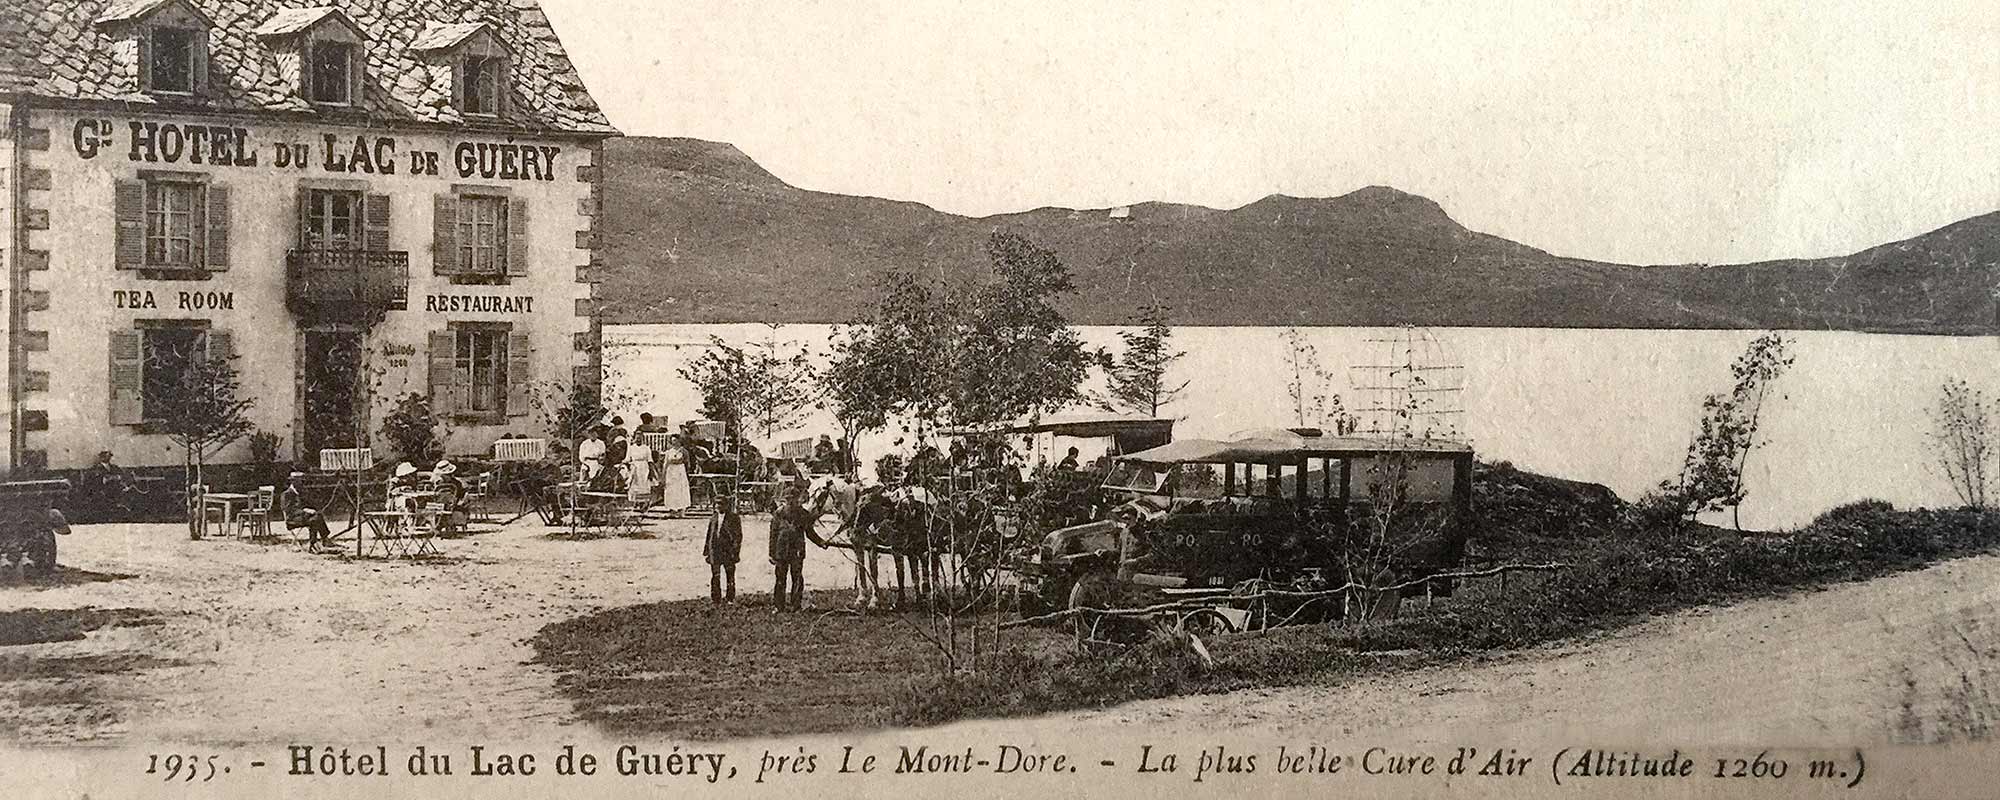 Air cure at the Auberge du Lac de Guéry